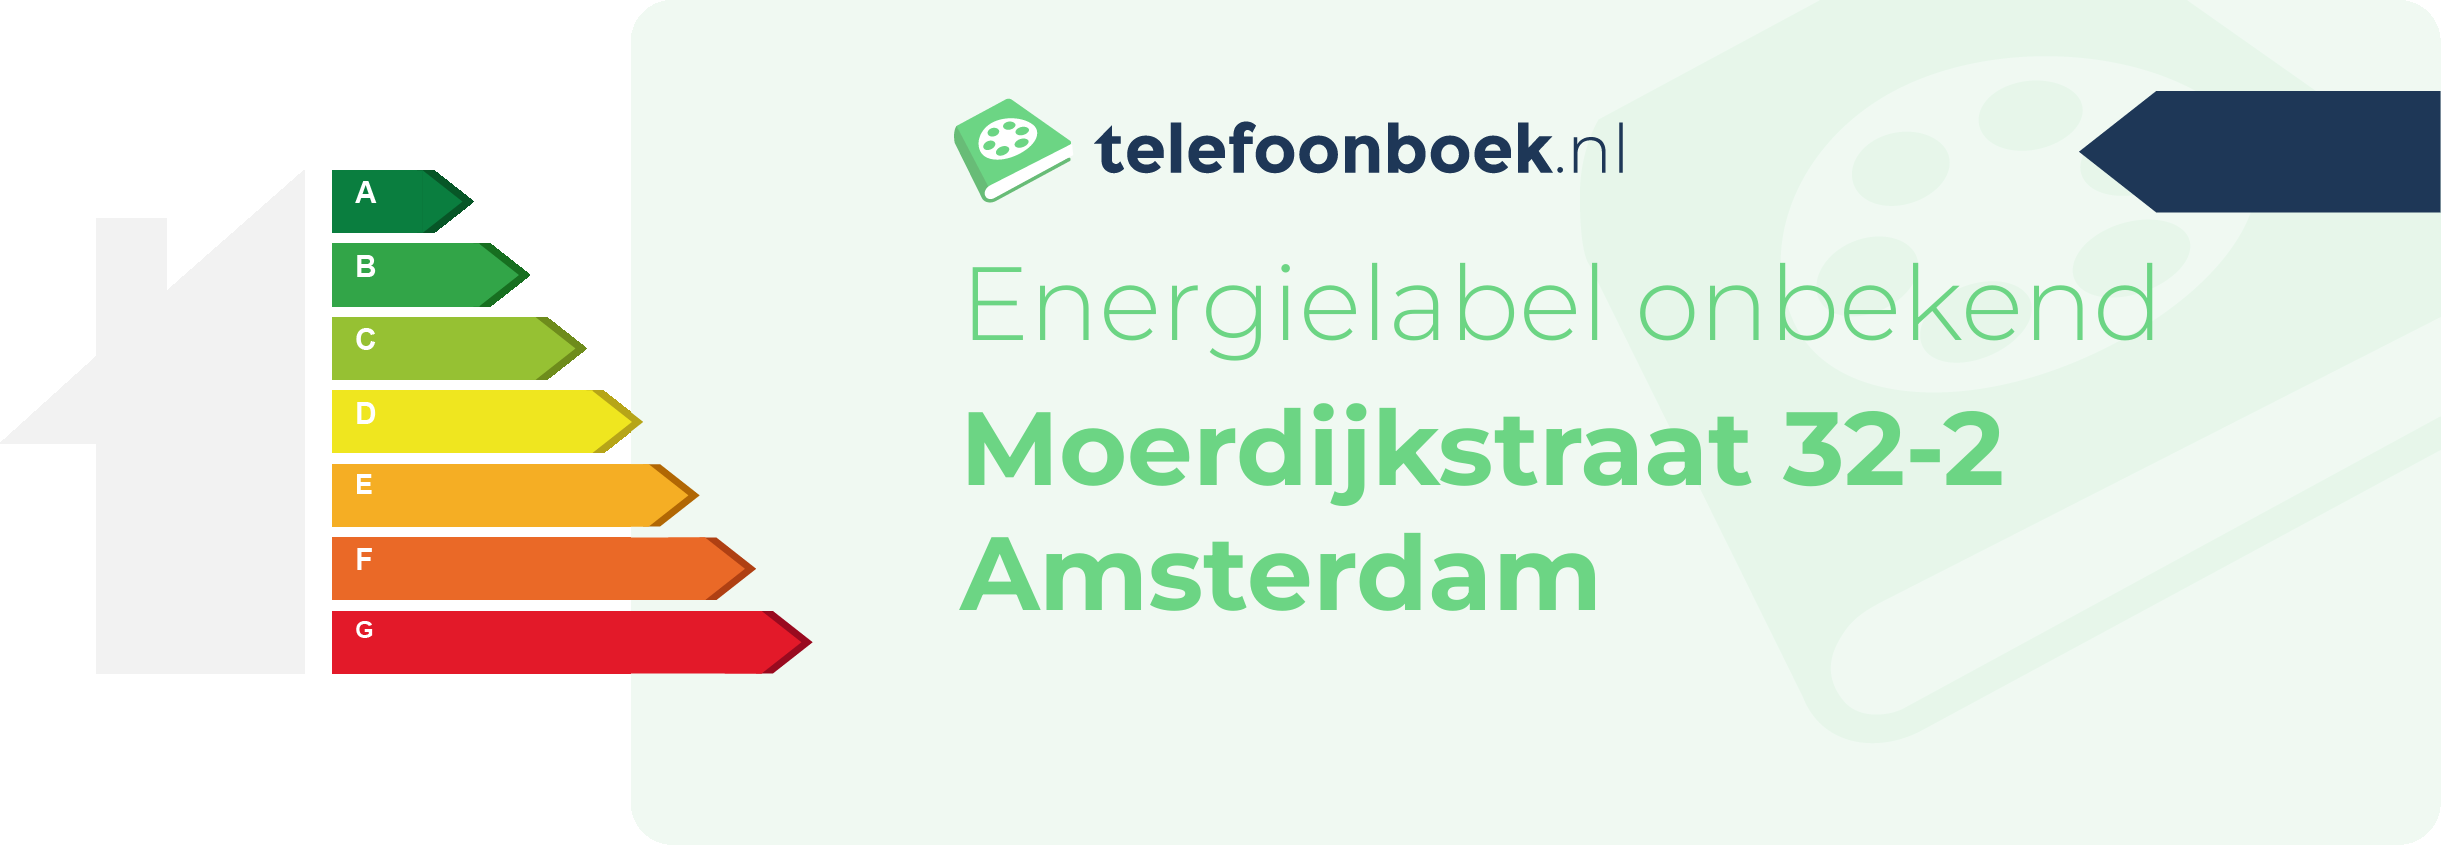 Energielabel Moerdijkstraat 32-2 Amsterdam